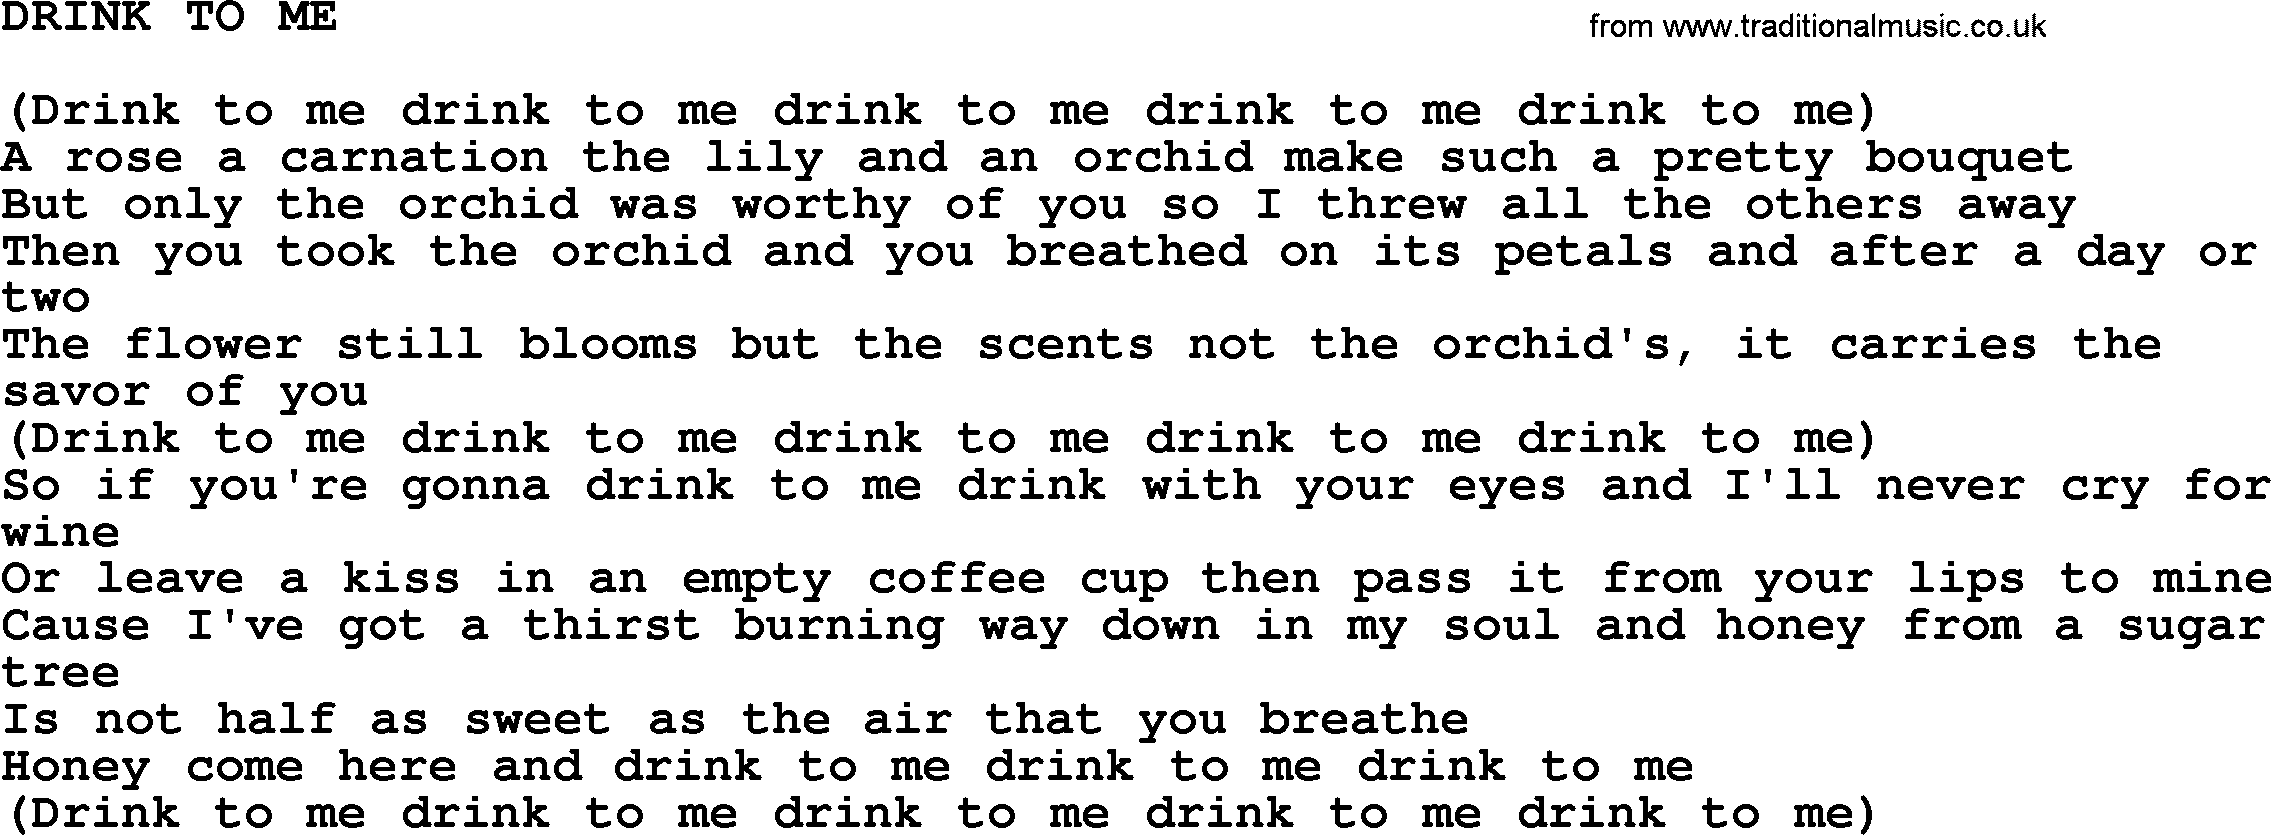 Johnny Cash song Drink To Me.txt lyrics